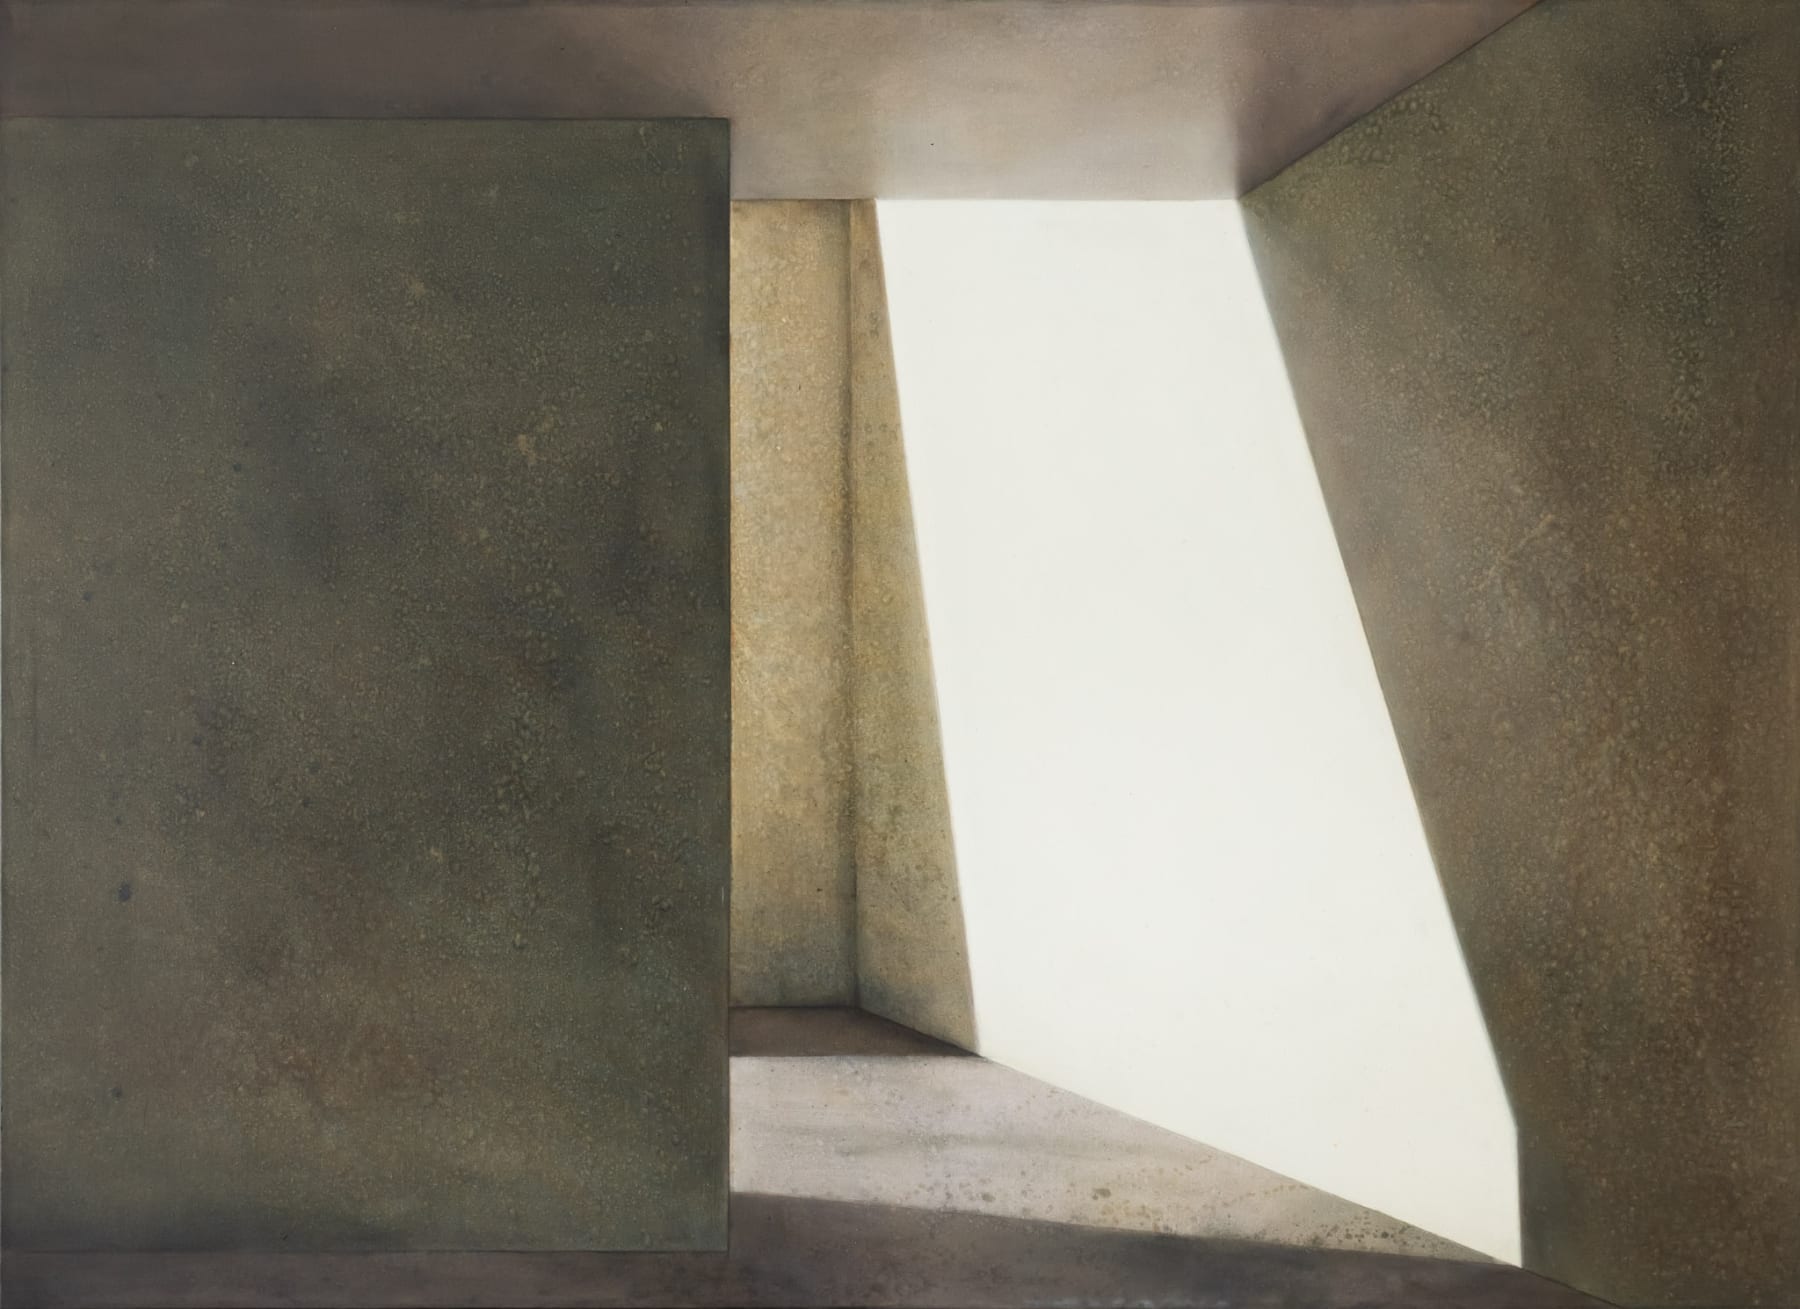 Yumebutai (Celedonite) Oil on Canvas Charcoal Shadow Box Frame 168 x 122cm $ 10,500.00 SOLD